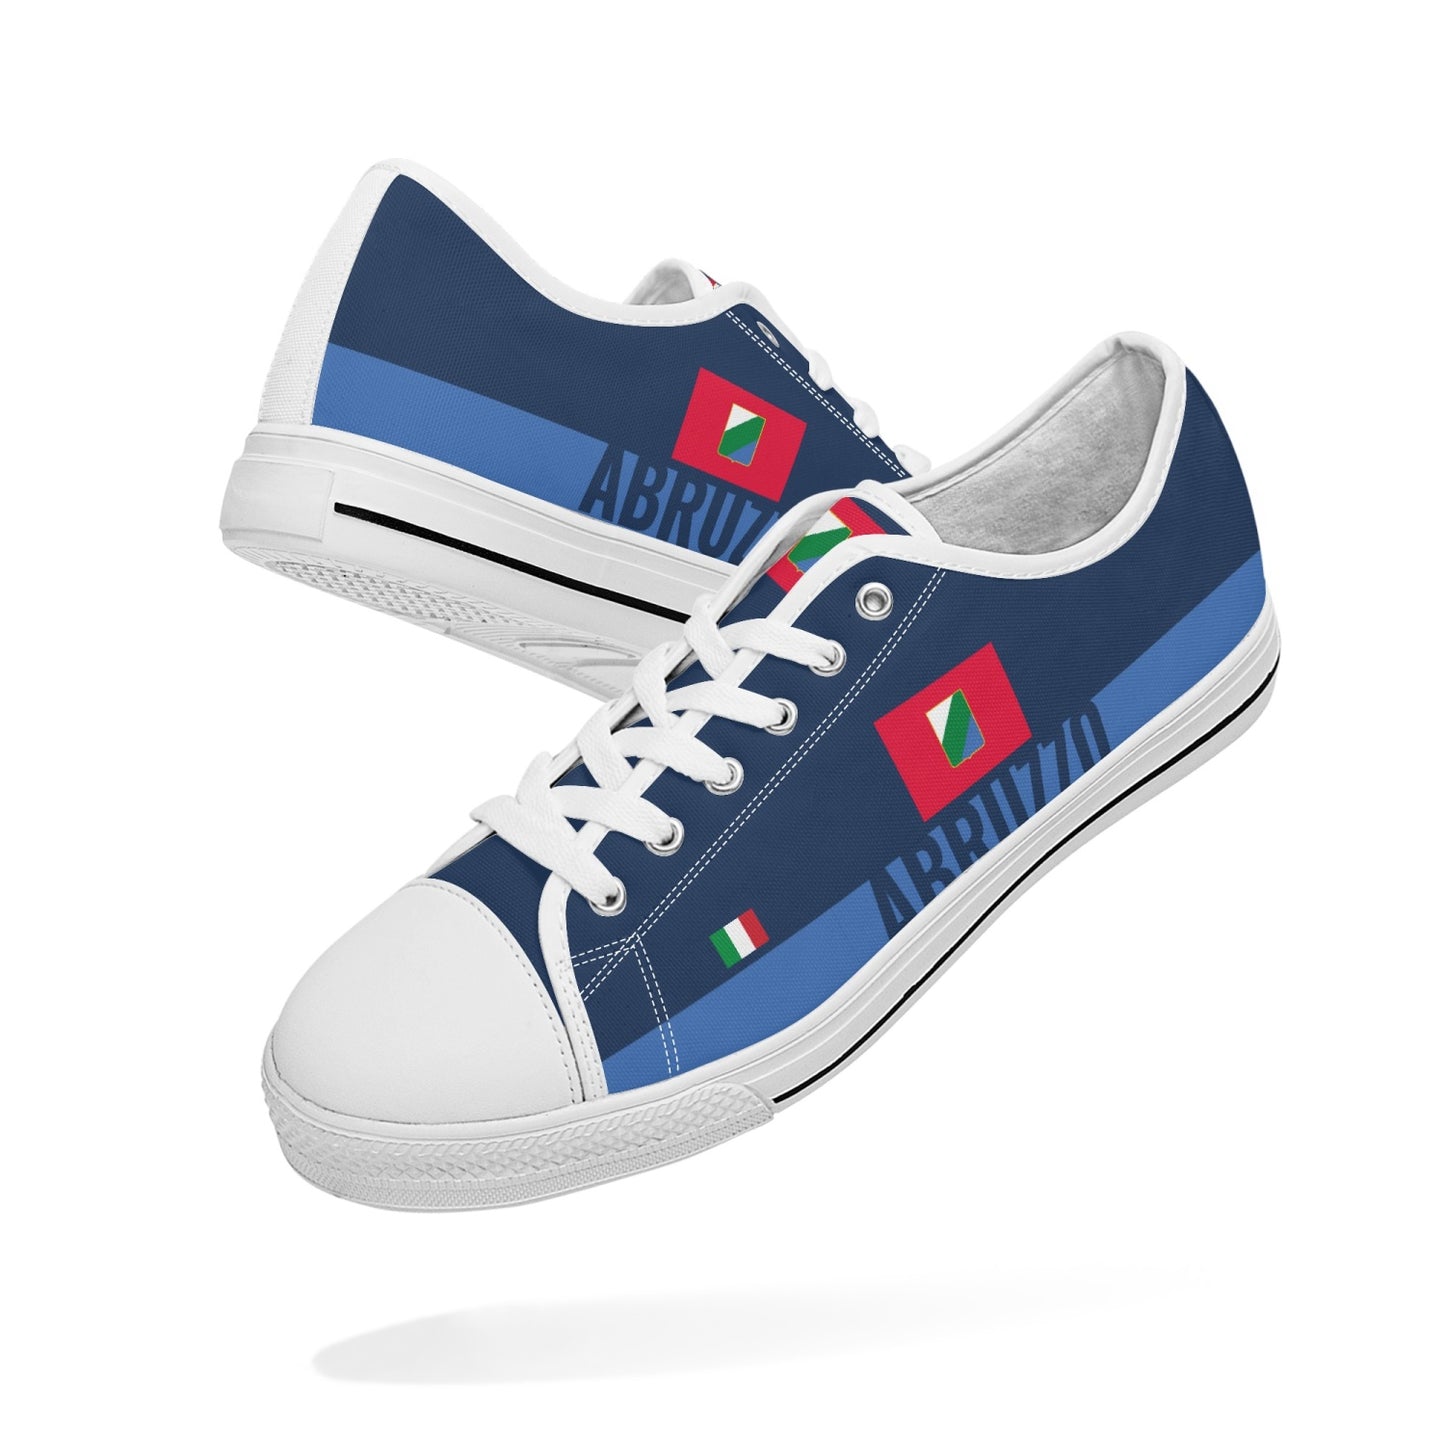 Abruzzo Shoes Low-top V2